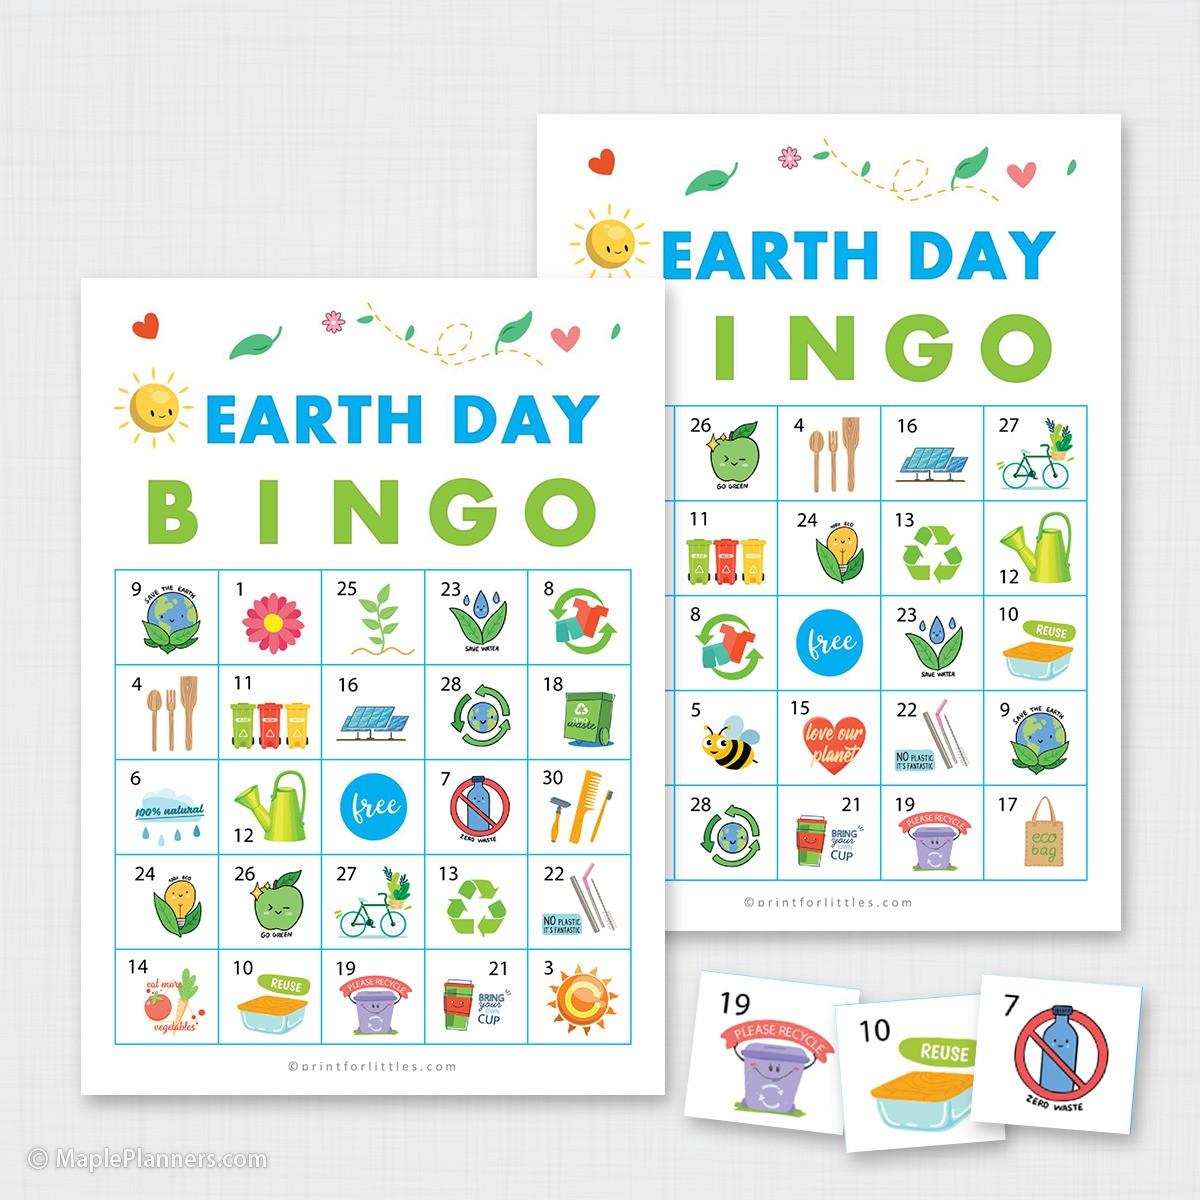 Premium Earth Day Bingo Printable Cards